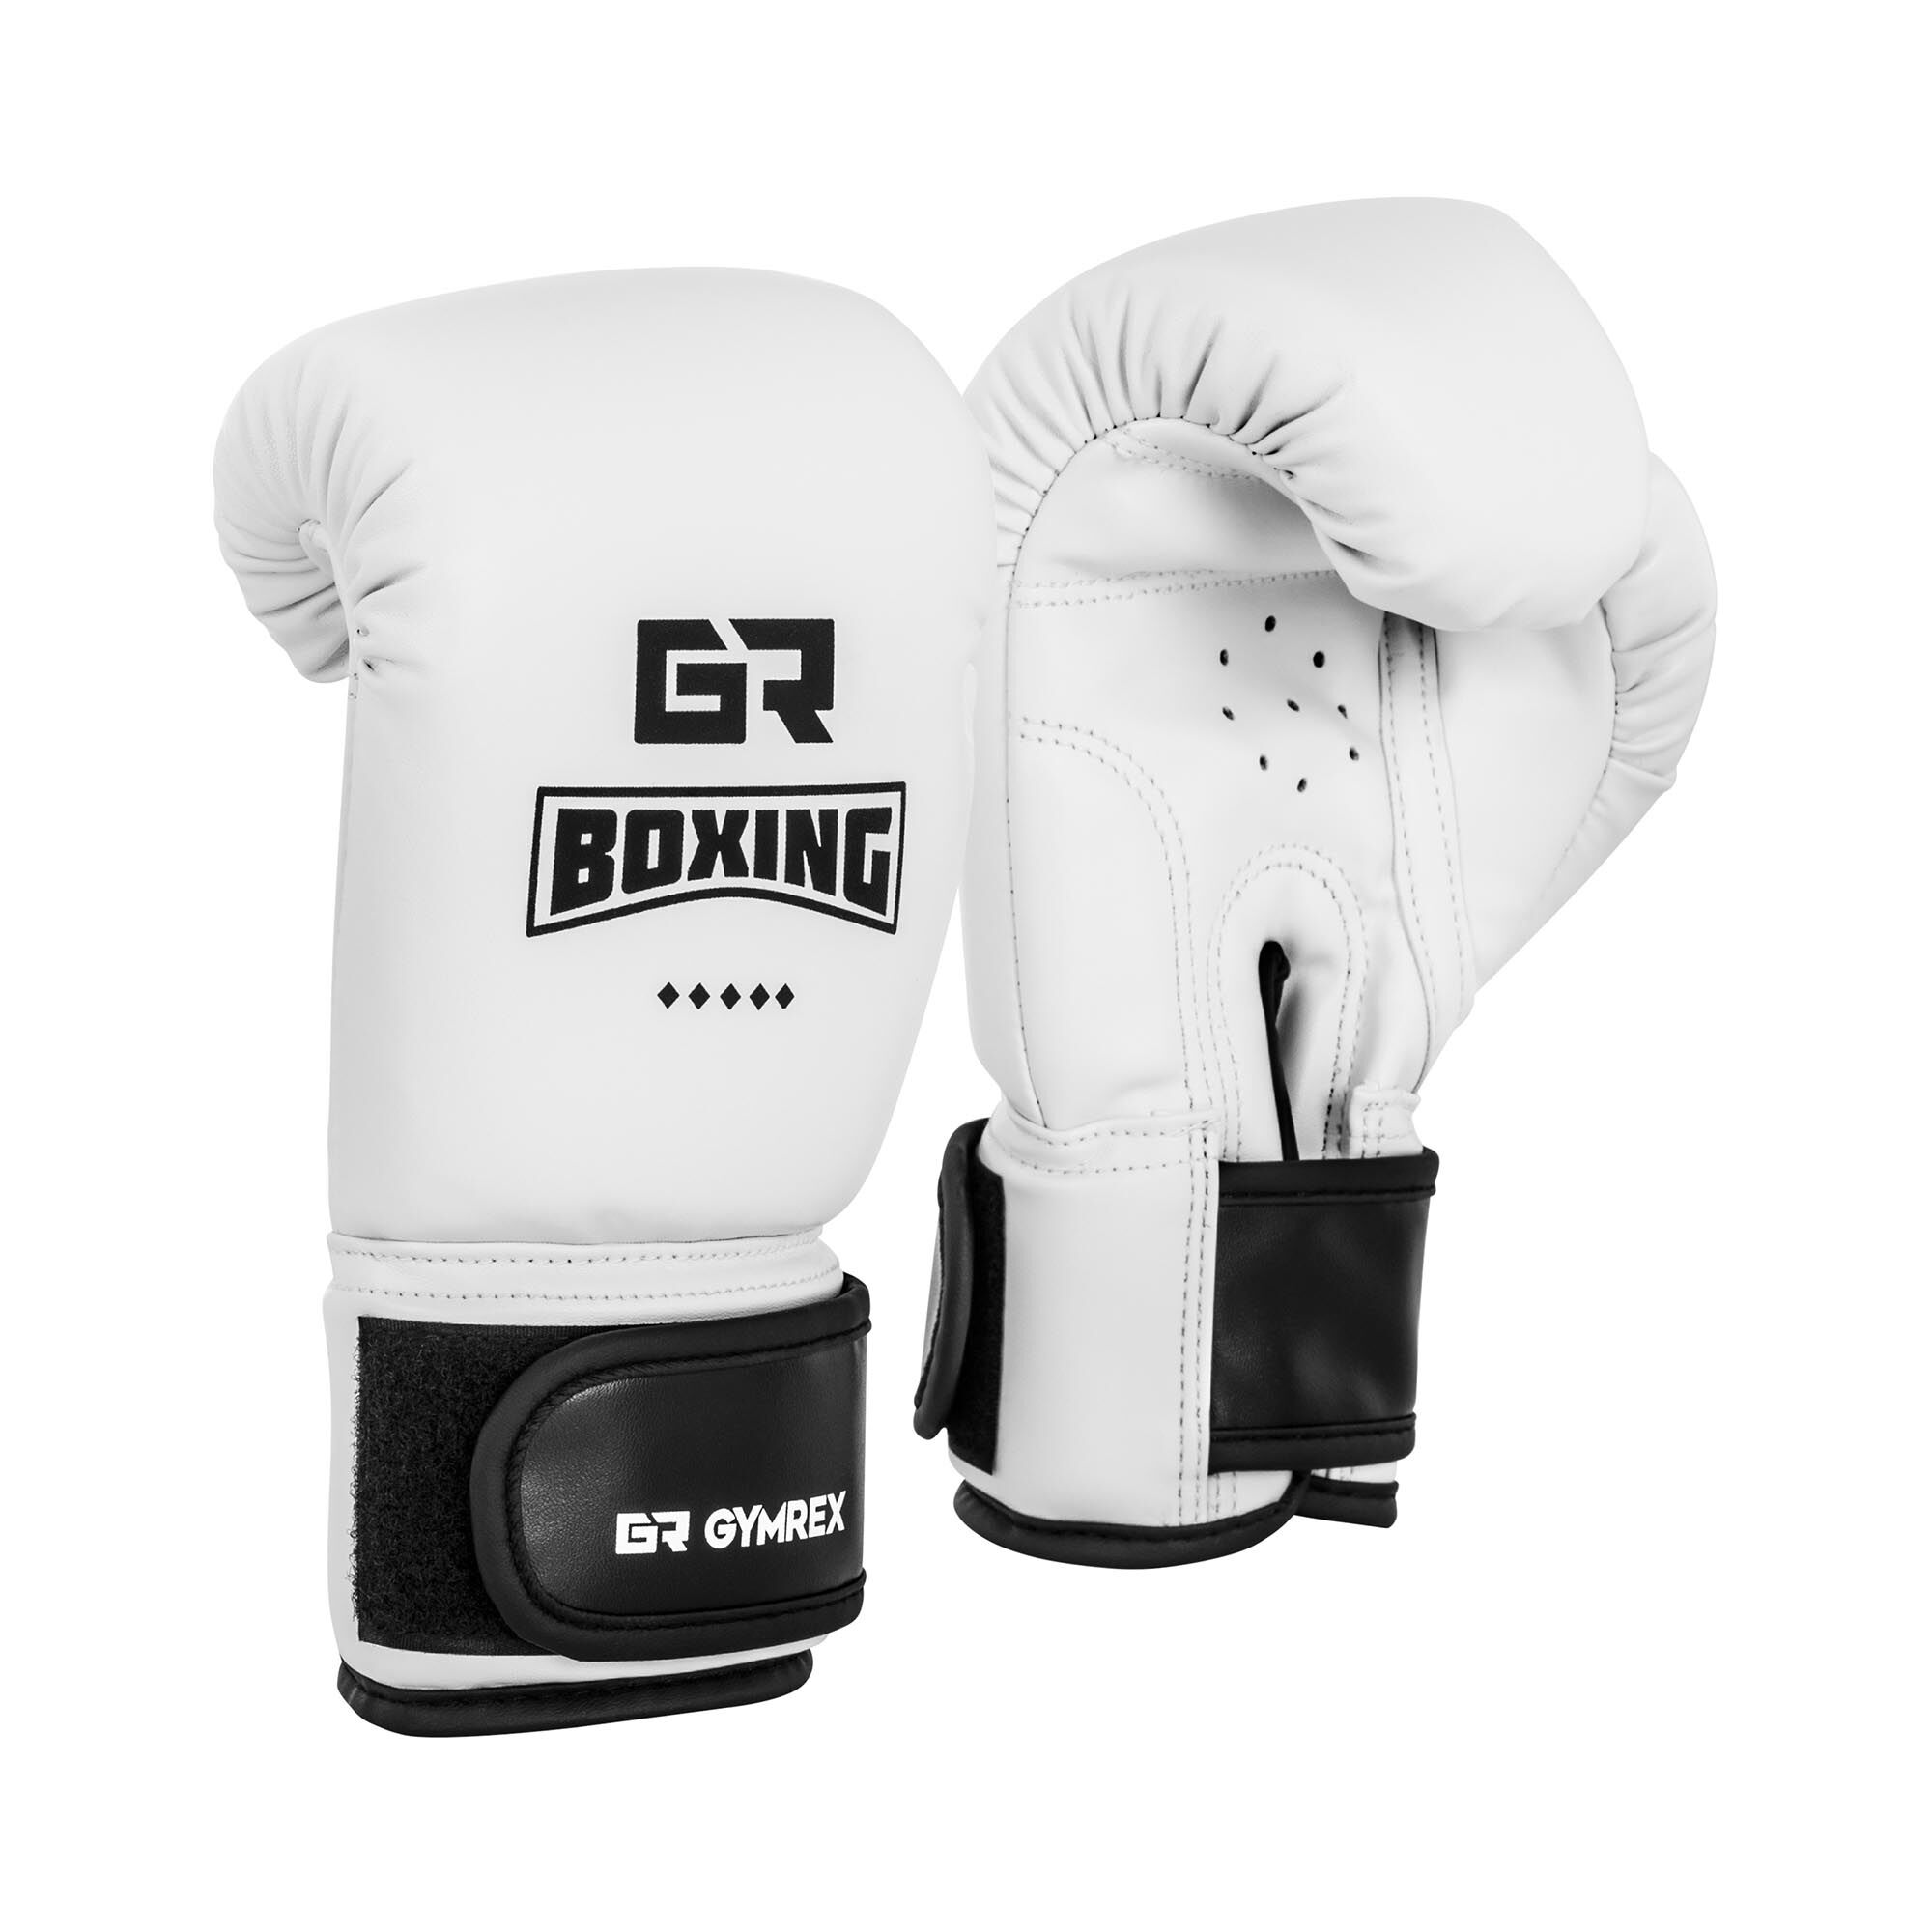 Gymrex Kids Boxing Gloves - 4 oz - white GR-BG 4W